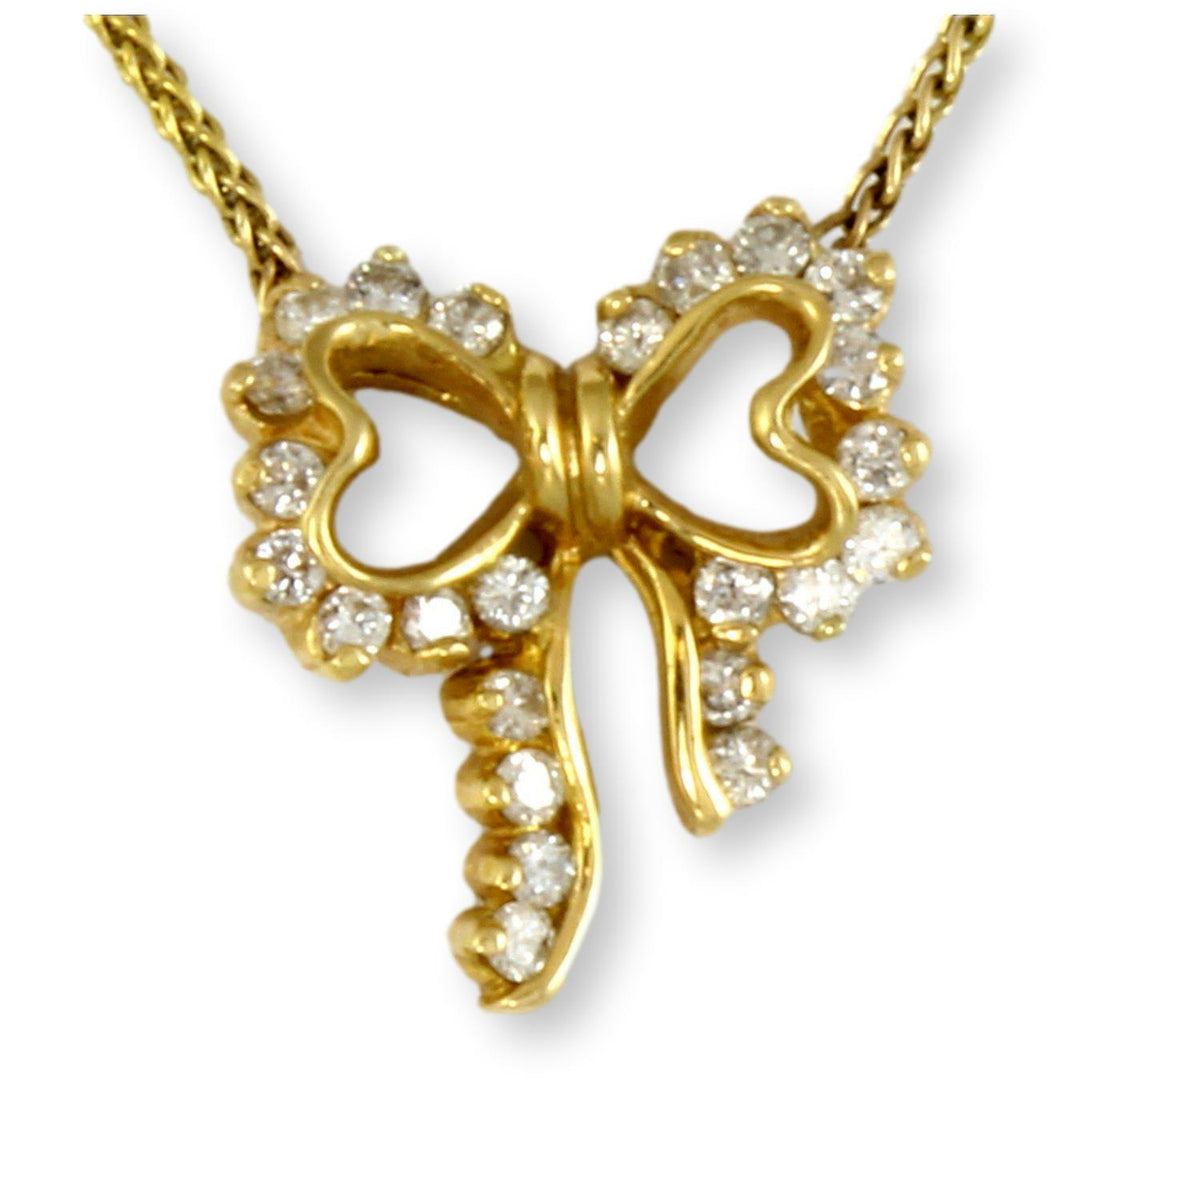 .43ctw Diamond 14K Yellow Gold Bow Pendant Necklace